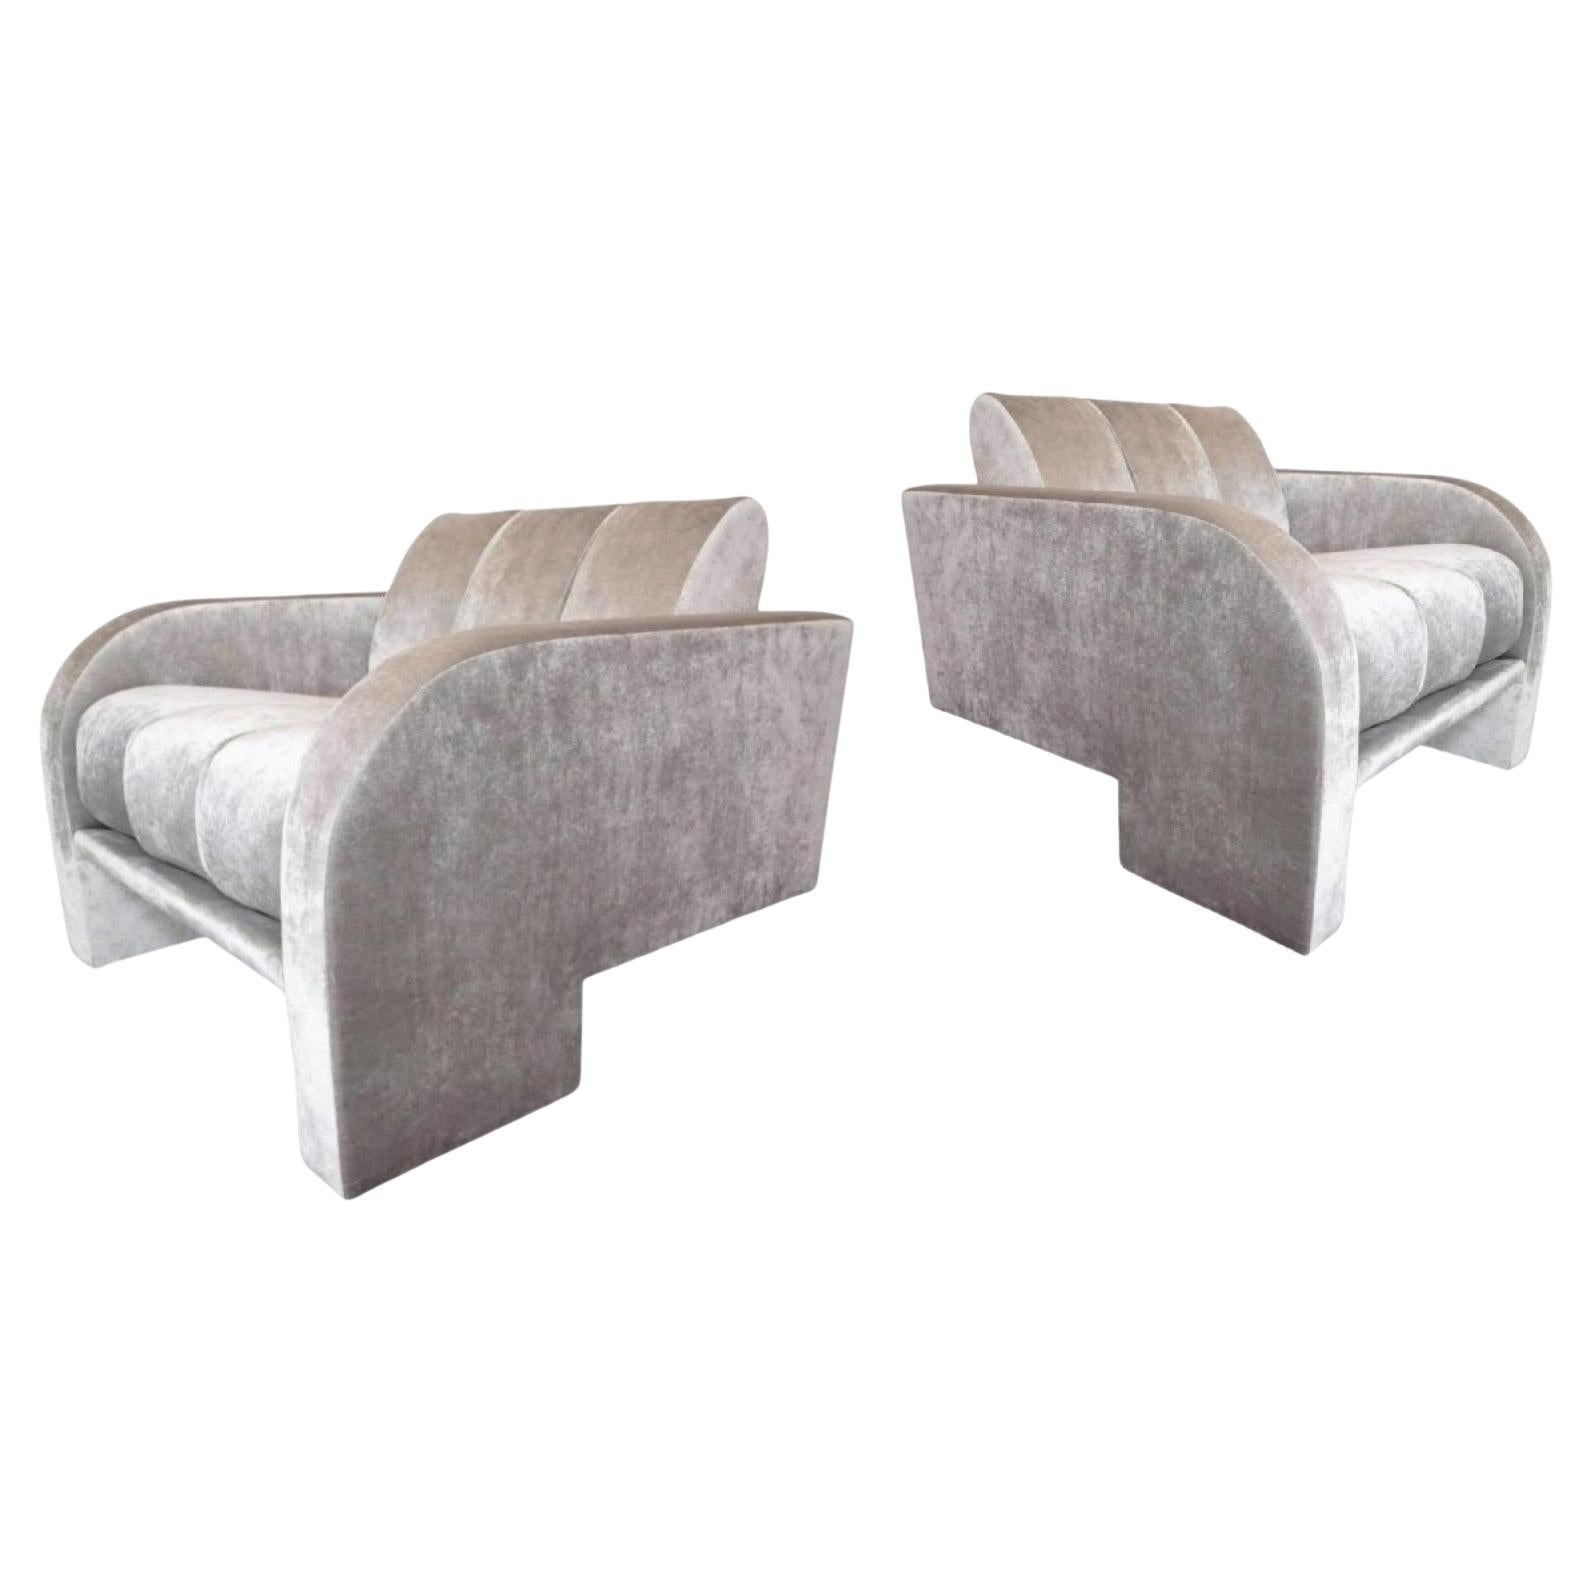 Pair "Deco" Lounge Chairs by Vladimir Kagan